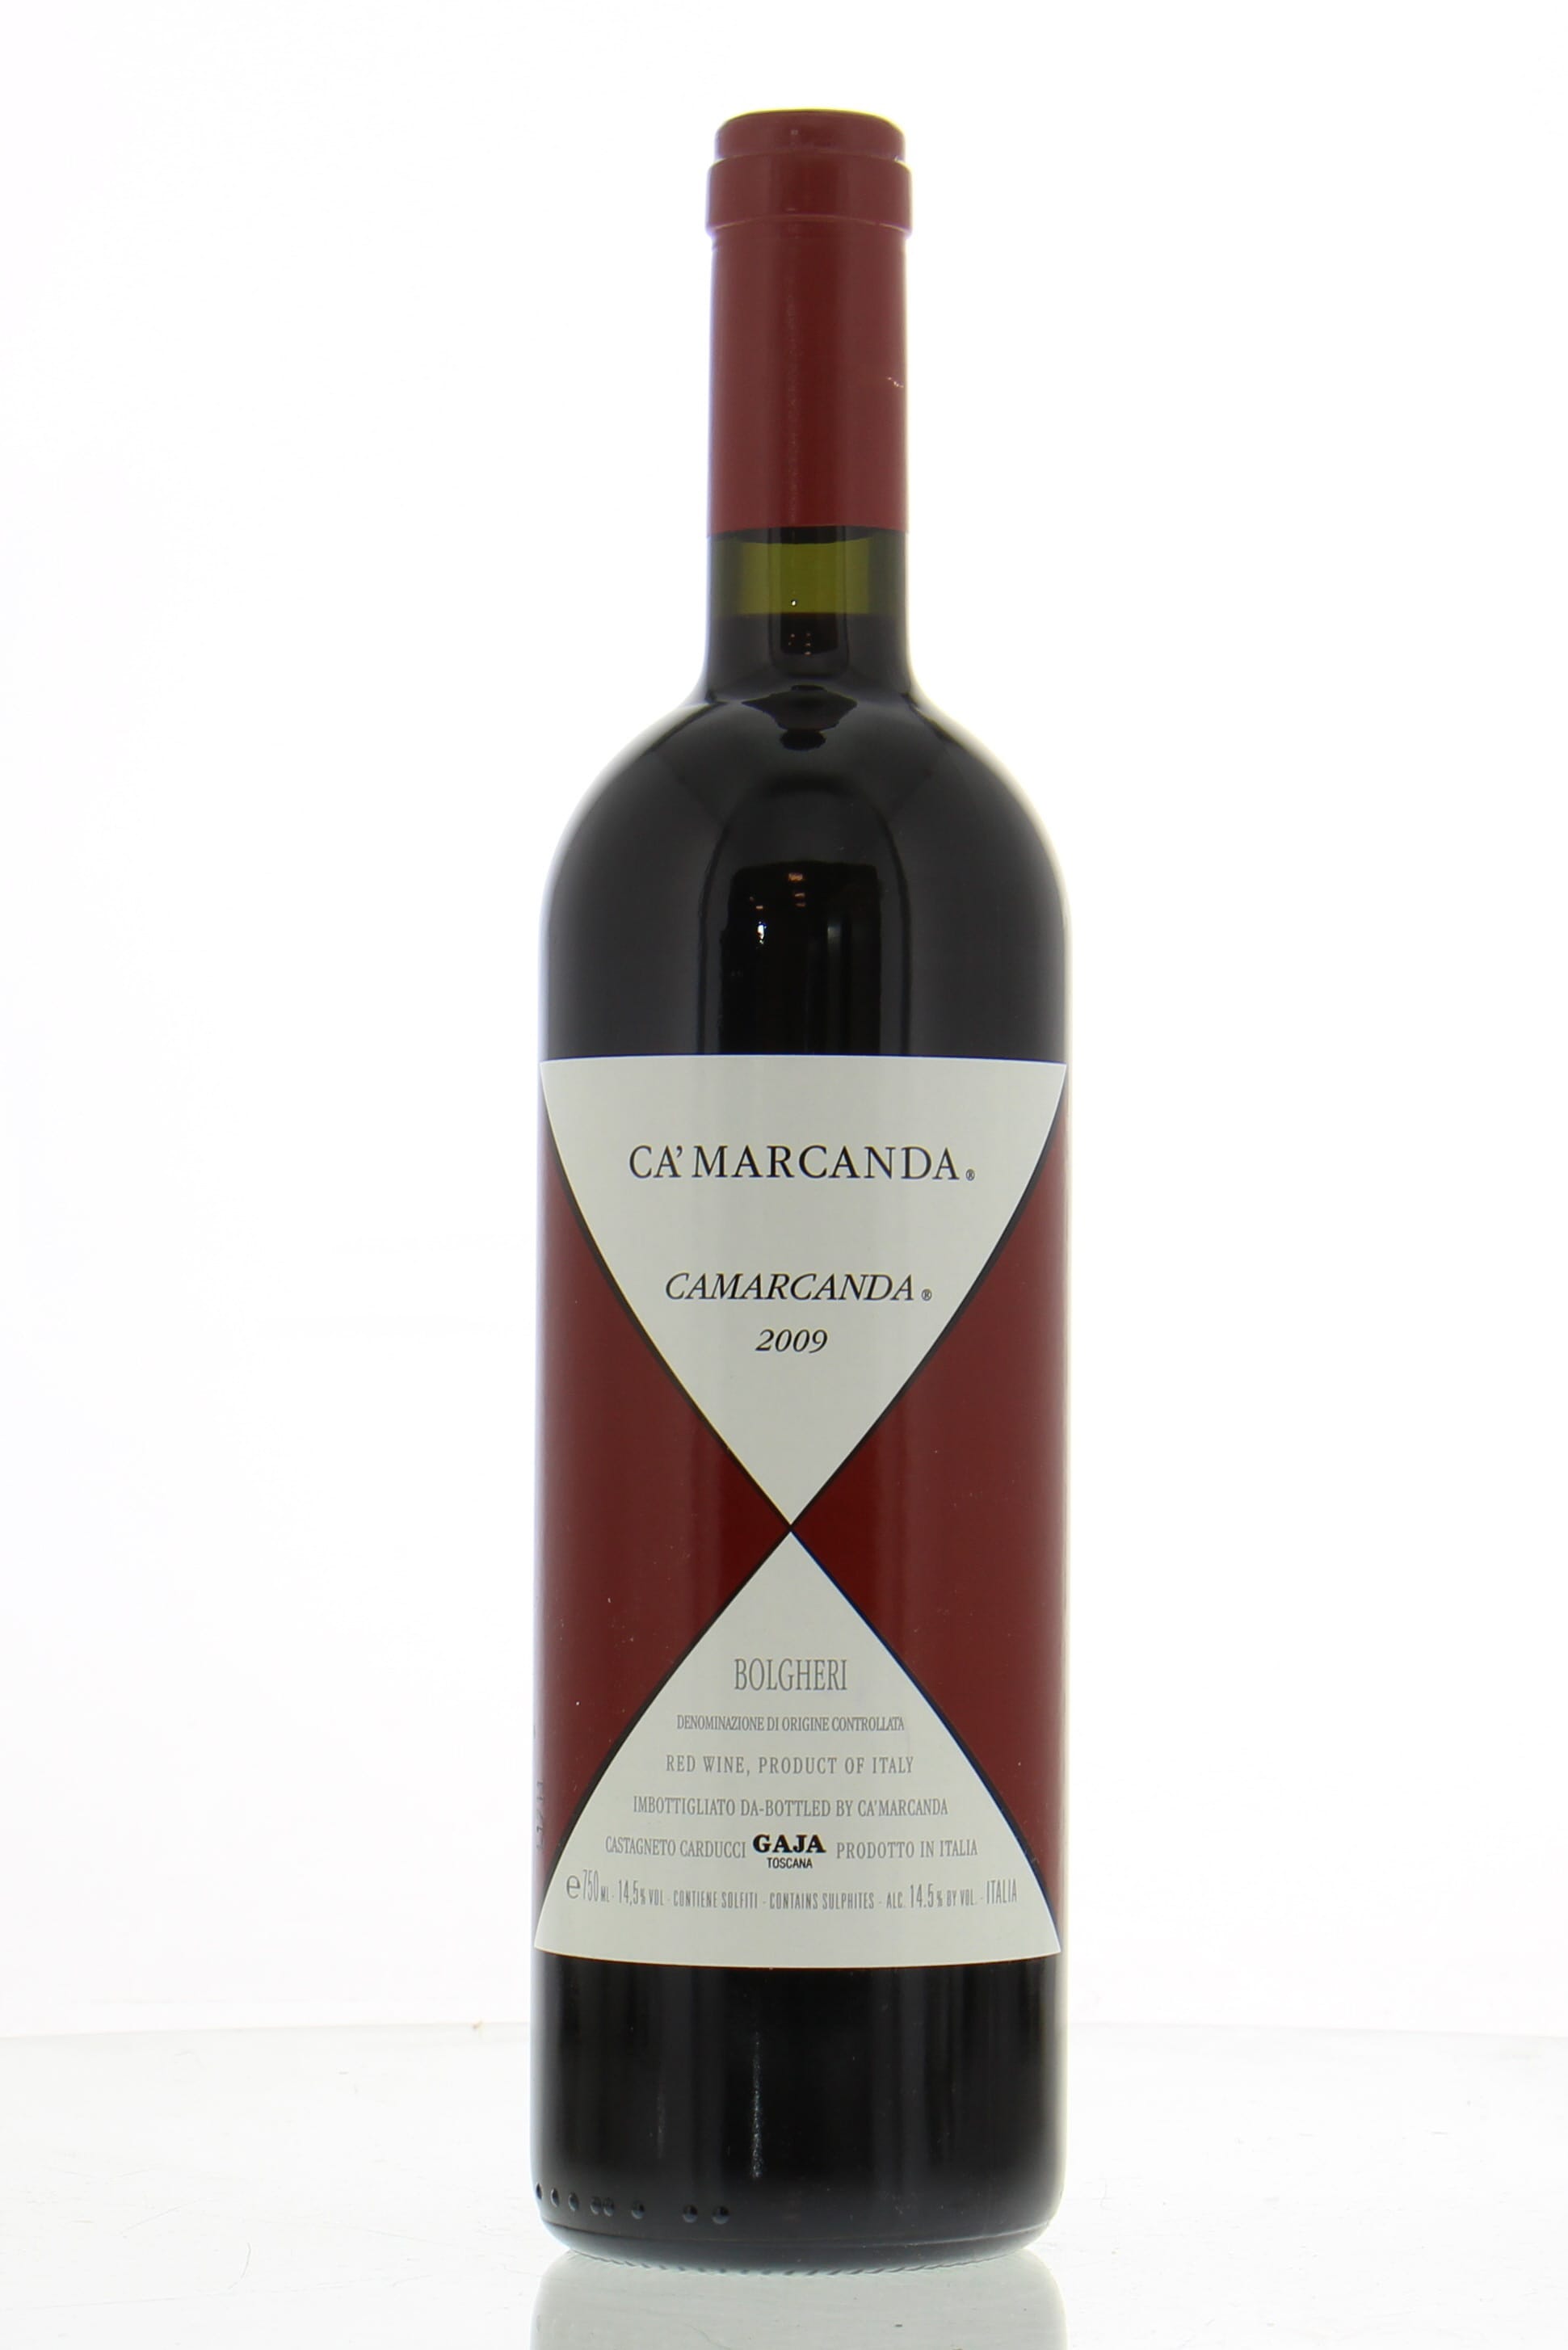 Ca'Marcanda - Camarcanda 2009 From Original Wooden Case